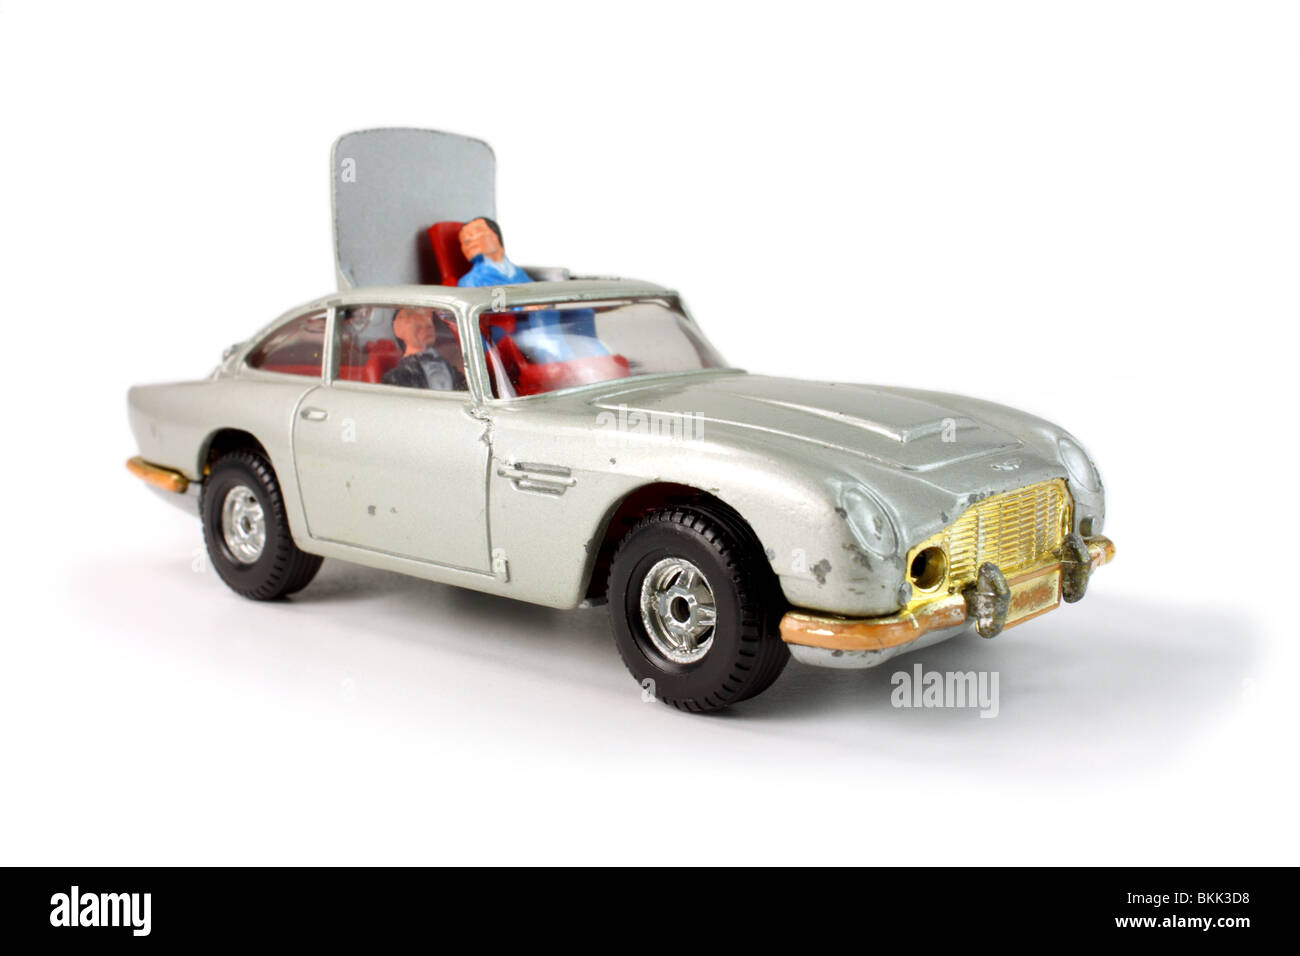 Original Corgi die-cast toy of James Bond's Aston Martin DB5 Stock Photo